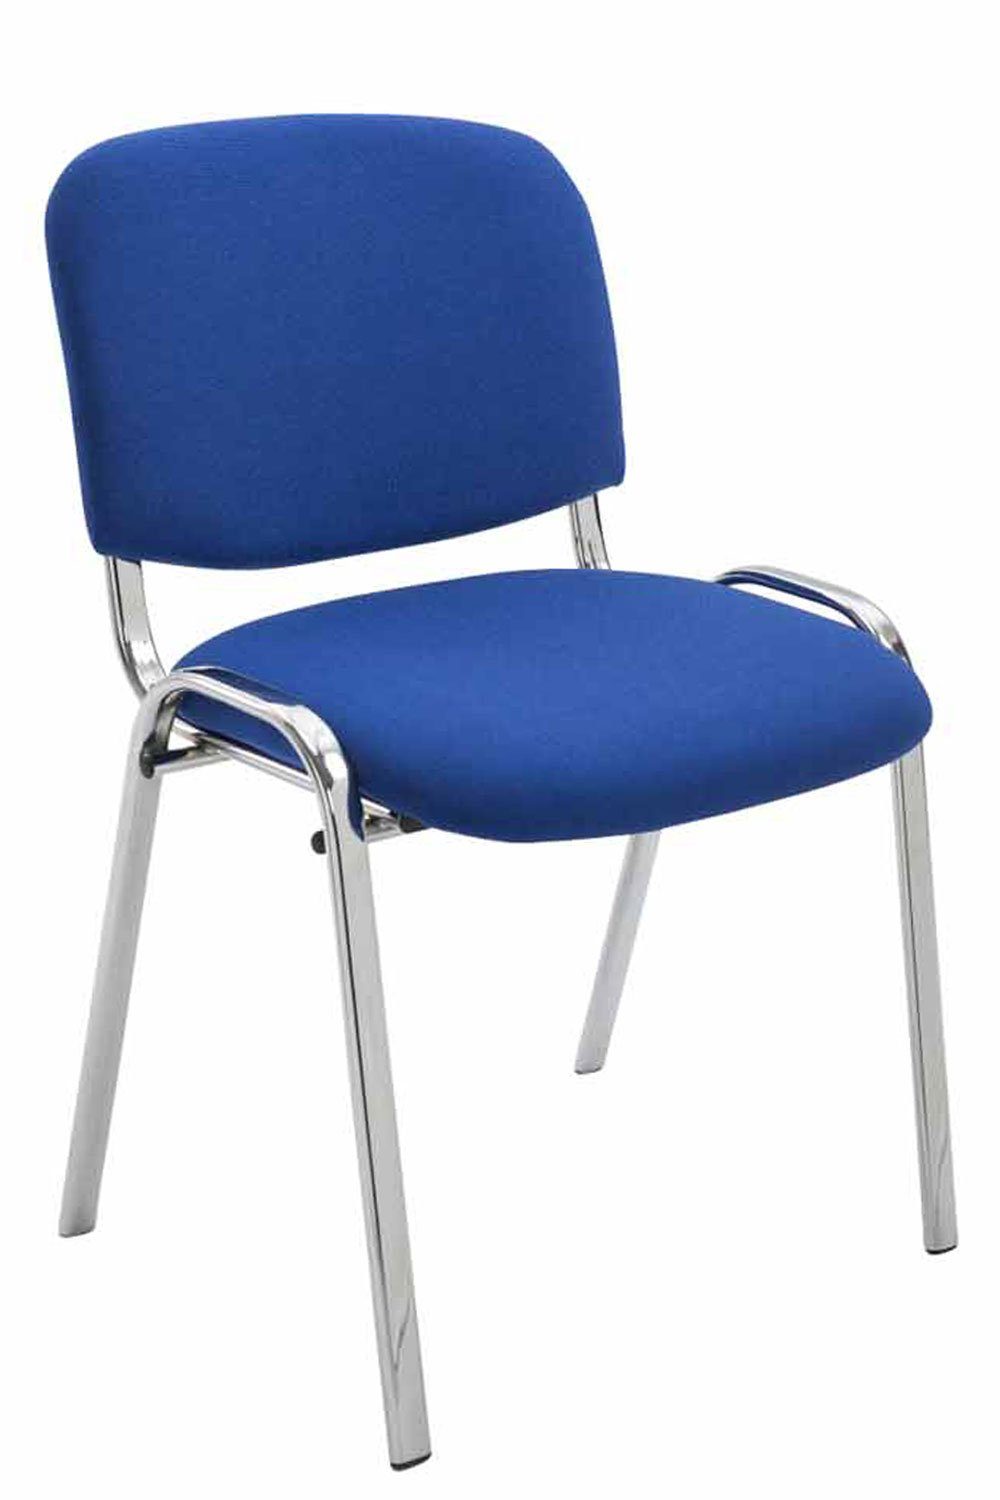 TPFLiving Besucherstuhl Keen mit hochwertiger Polsterung - Konferenzstuhl (Besprechungsstuhl - Warteraumstuhl - Messestuhl), Gestell: Metall chrom - Sitzfläche: Stoff blau